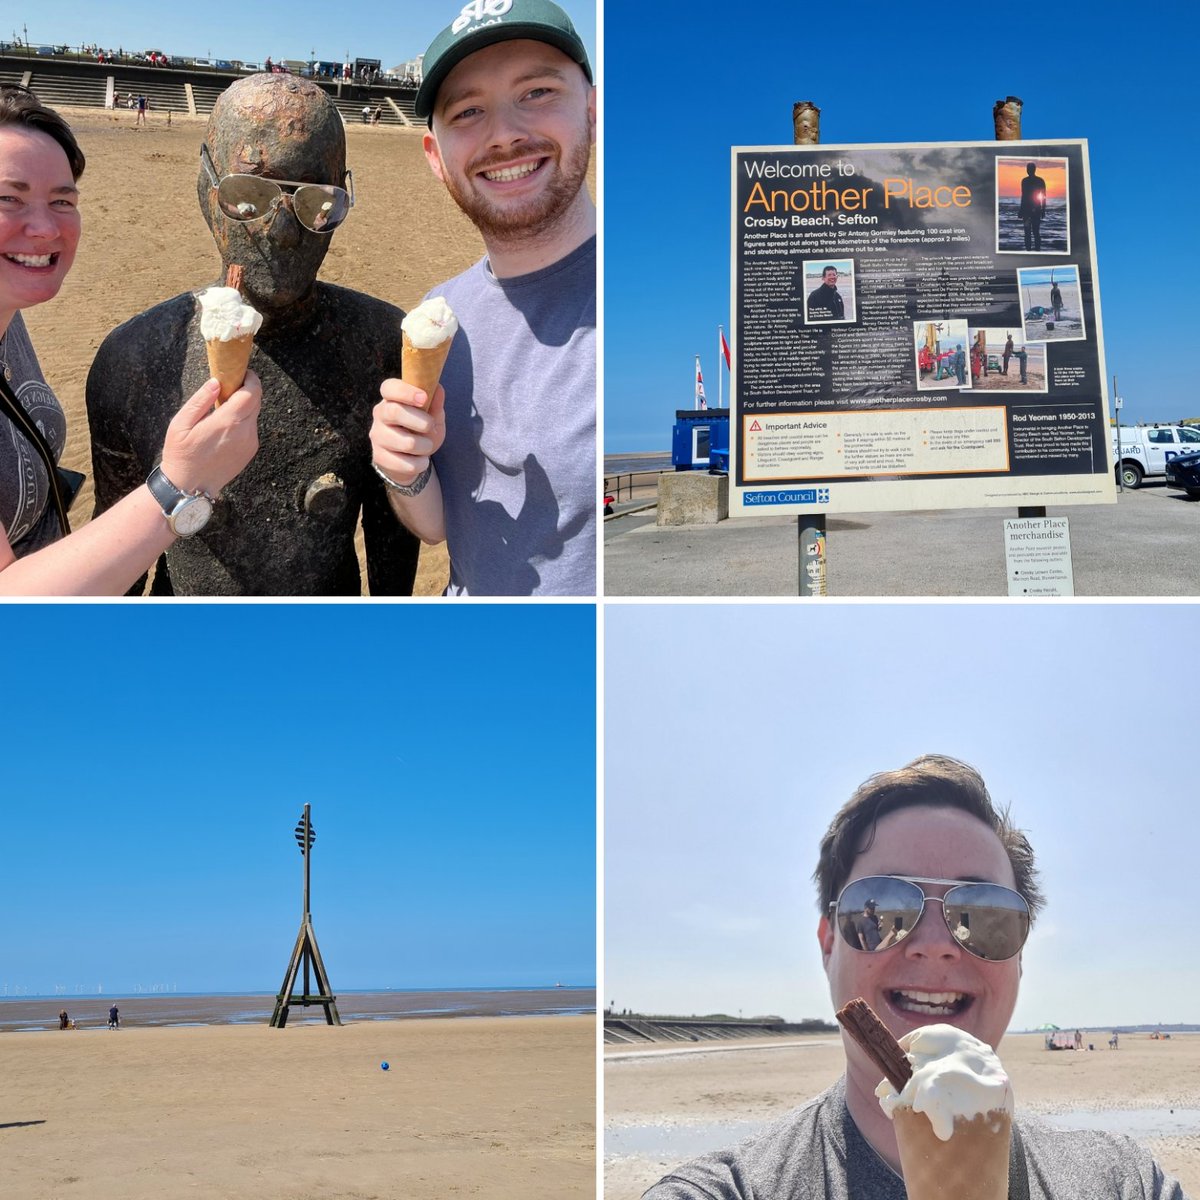 Enjoy the #sunshine UK #BankHolidayWeekend time for ice cream on the #beach #crosbybeach 
@maryrfinnegan @Pinklinkladies @GECinD8 @Eva_Awards @ExploreLpool @TheGuideLpool